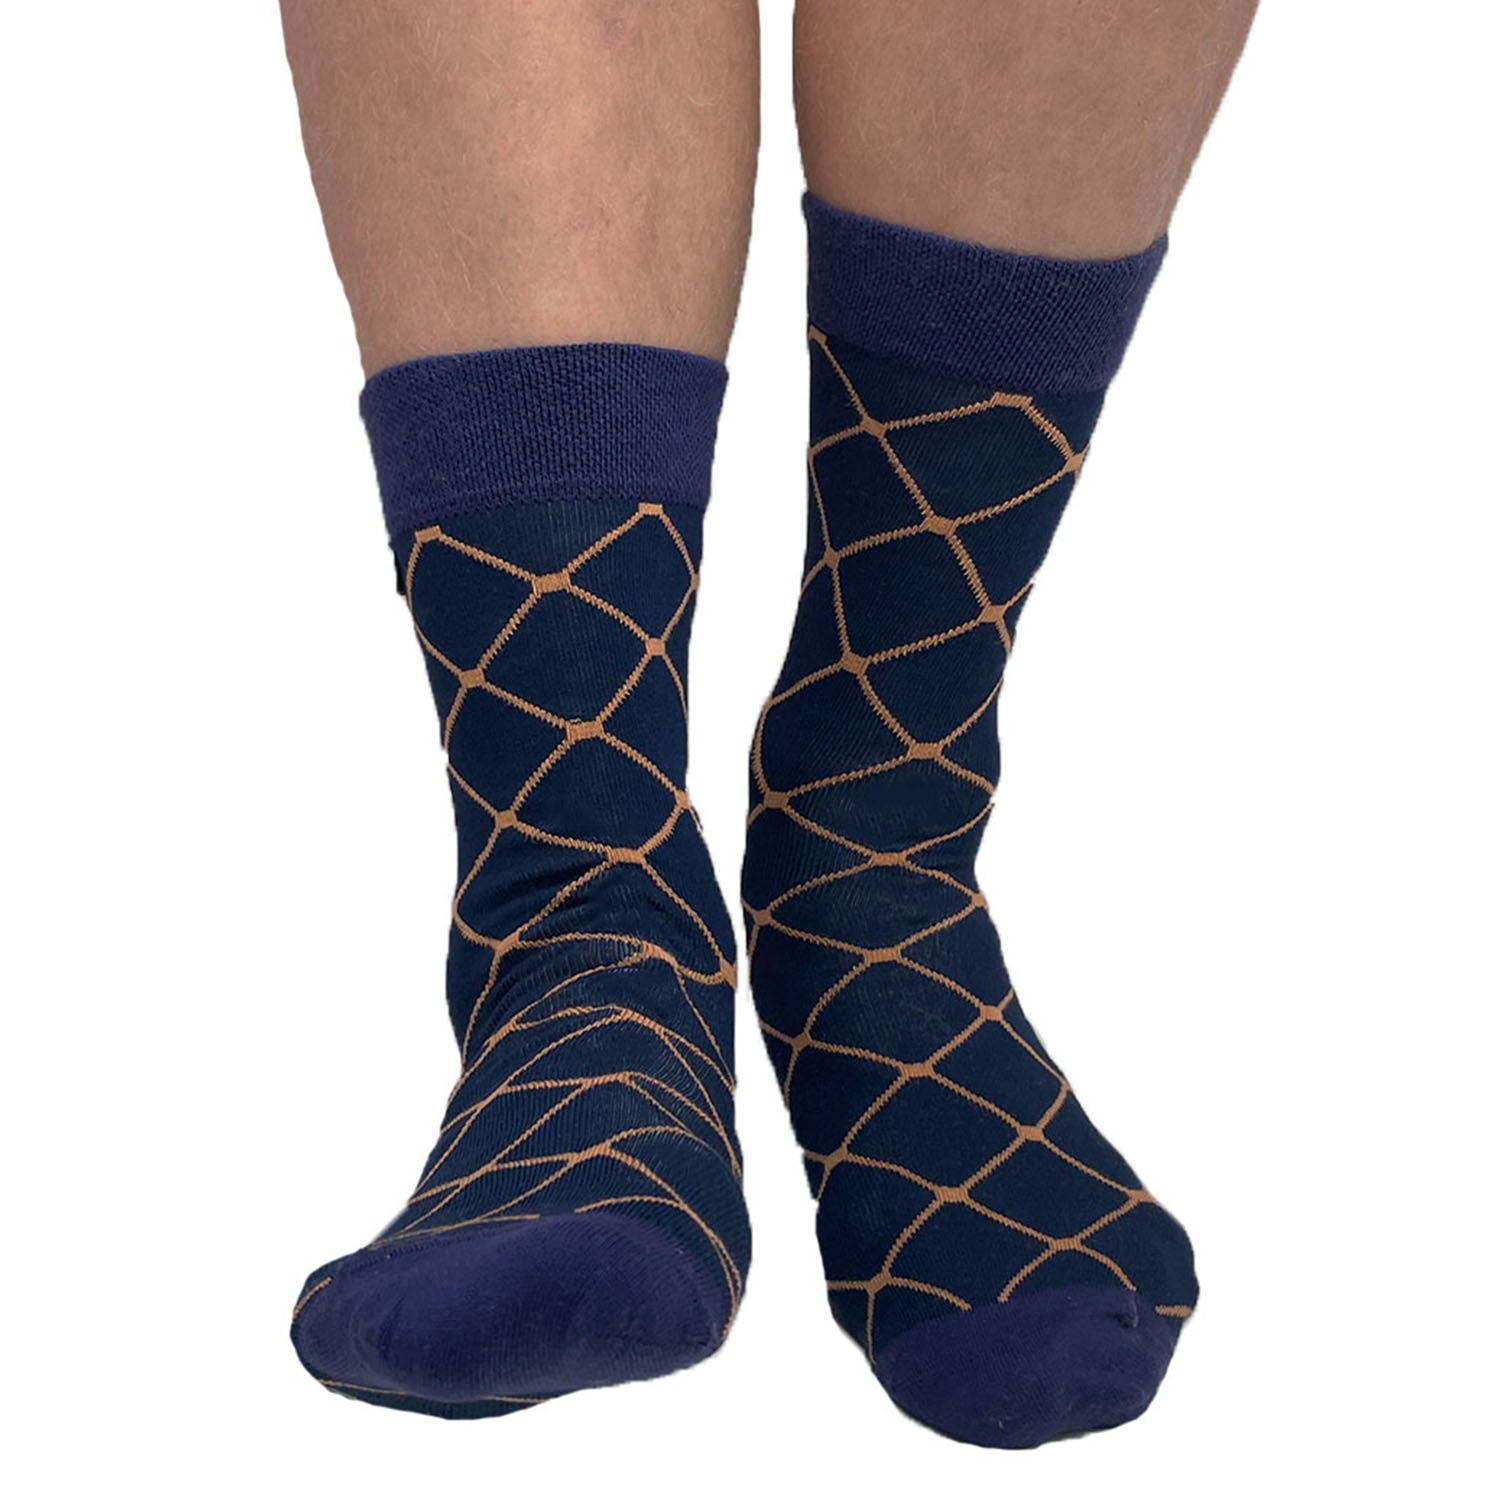 Blue fashion socks